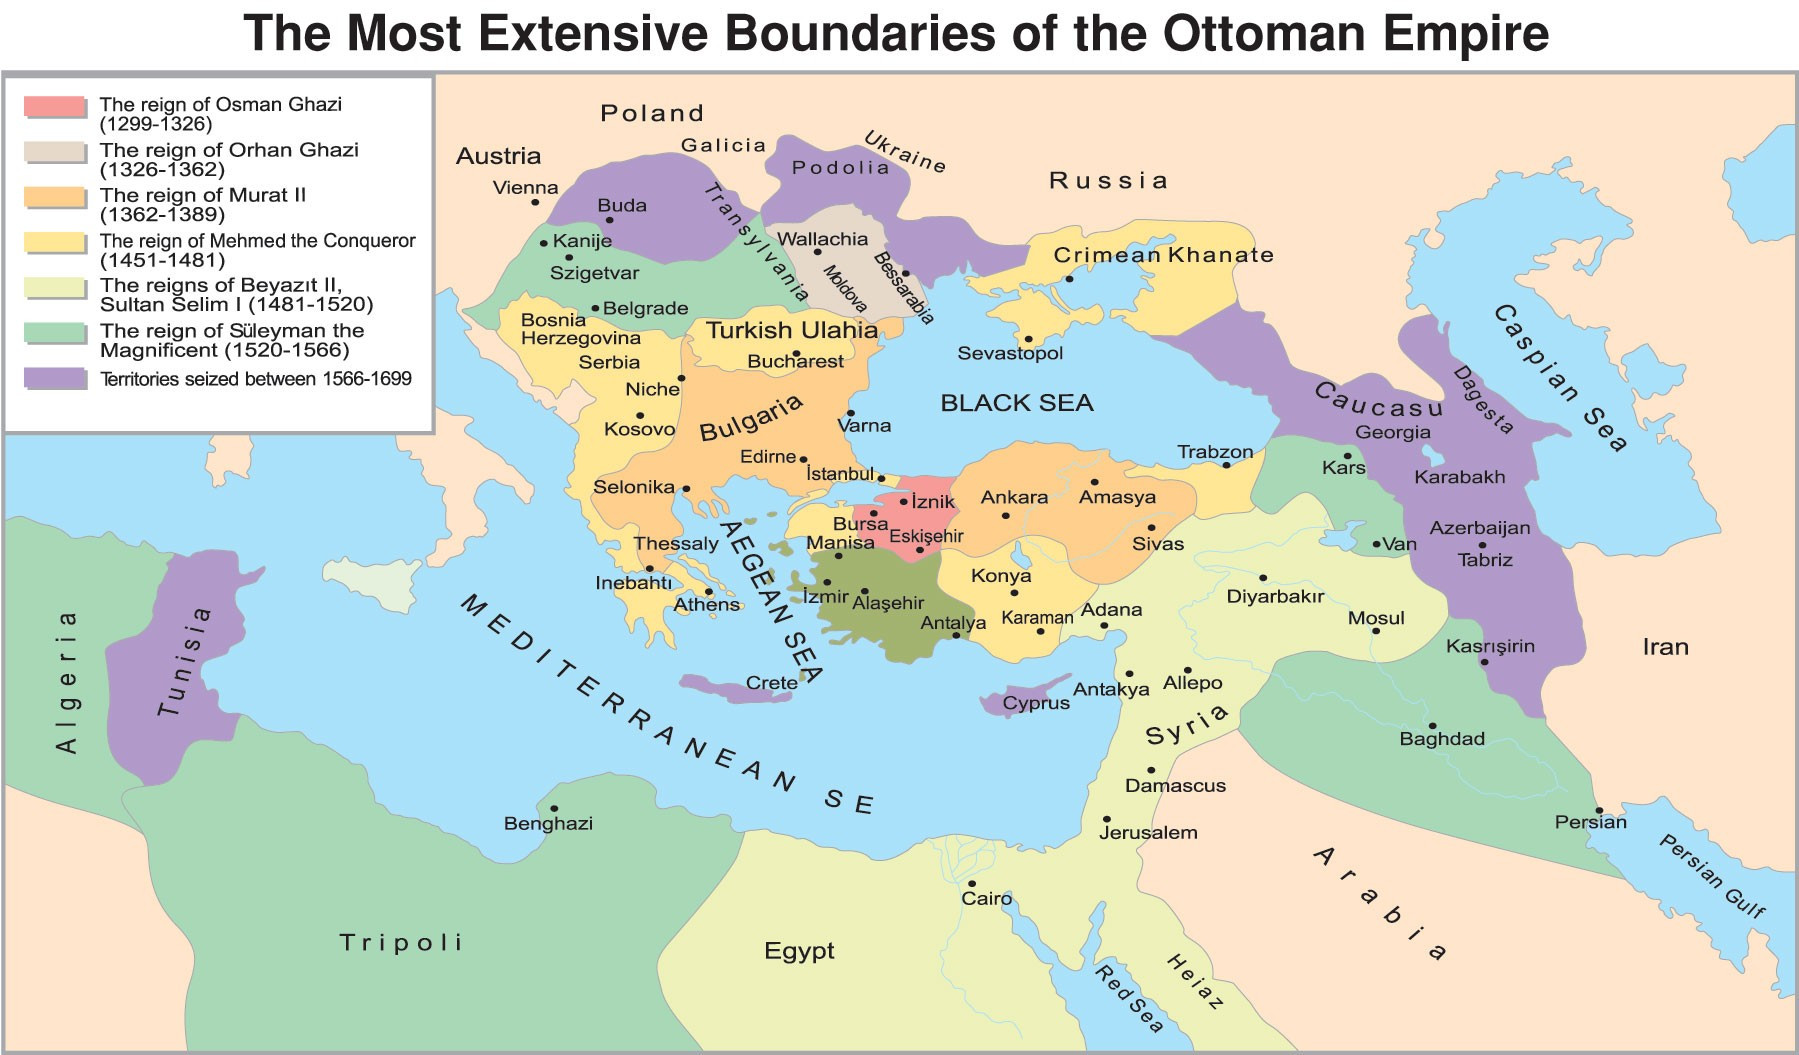 Ottoman Empire
 The Ottoman Empire